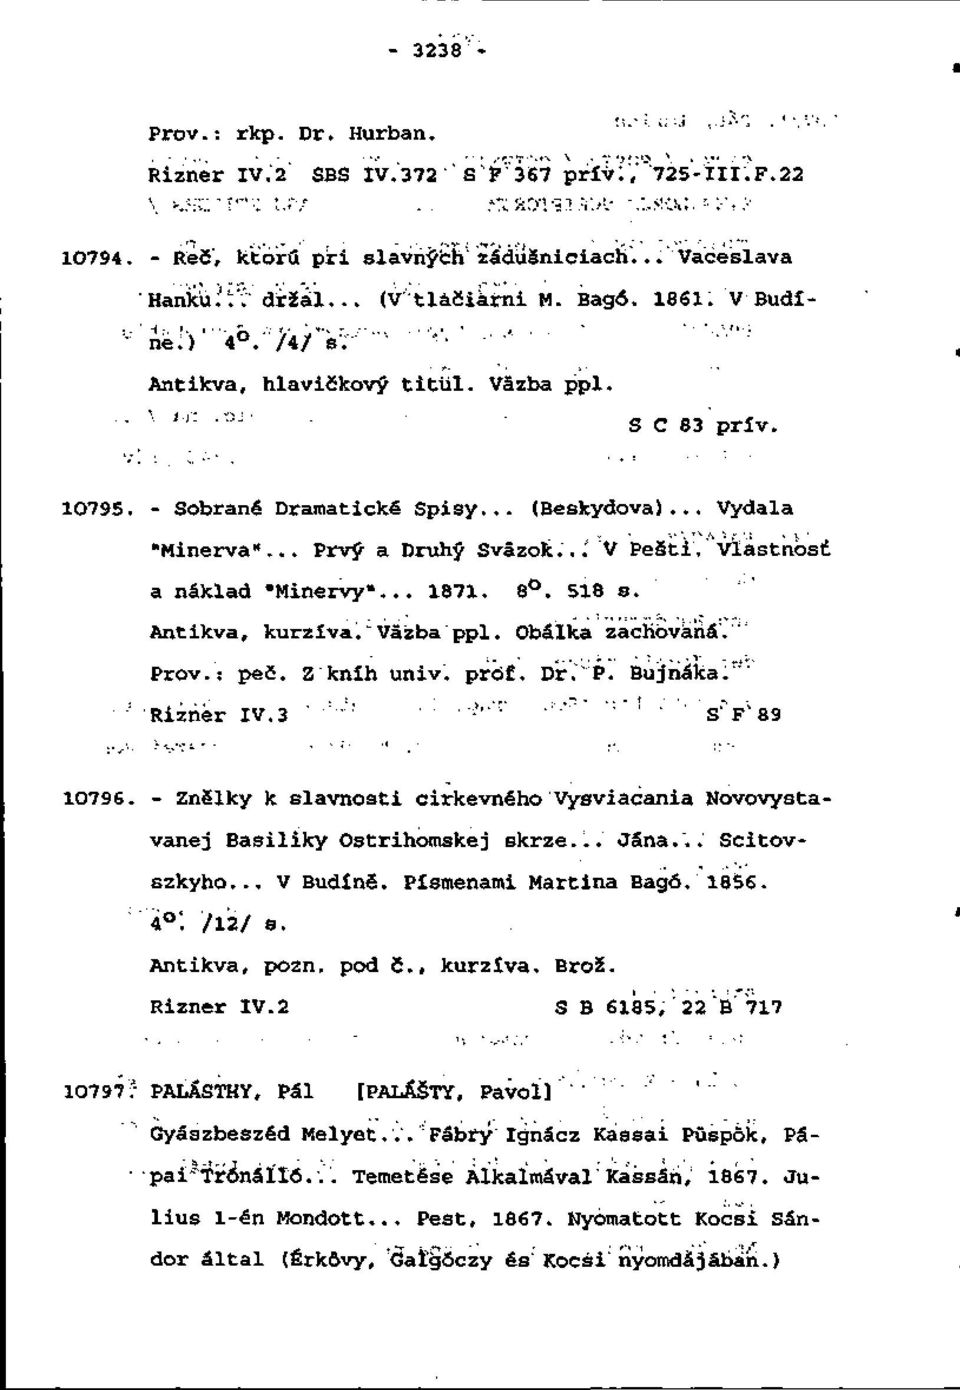 Vlastnosti a náklad "Minervy"... 1871. 8. 518 s. Antikva, kurzíva. "Väzba ppl. Obálka zachovaná'."' Prôv.: peč. Z kníh univ'. prof. Dr.~"P. Bujnáka."" : Rižňér IV.